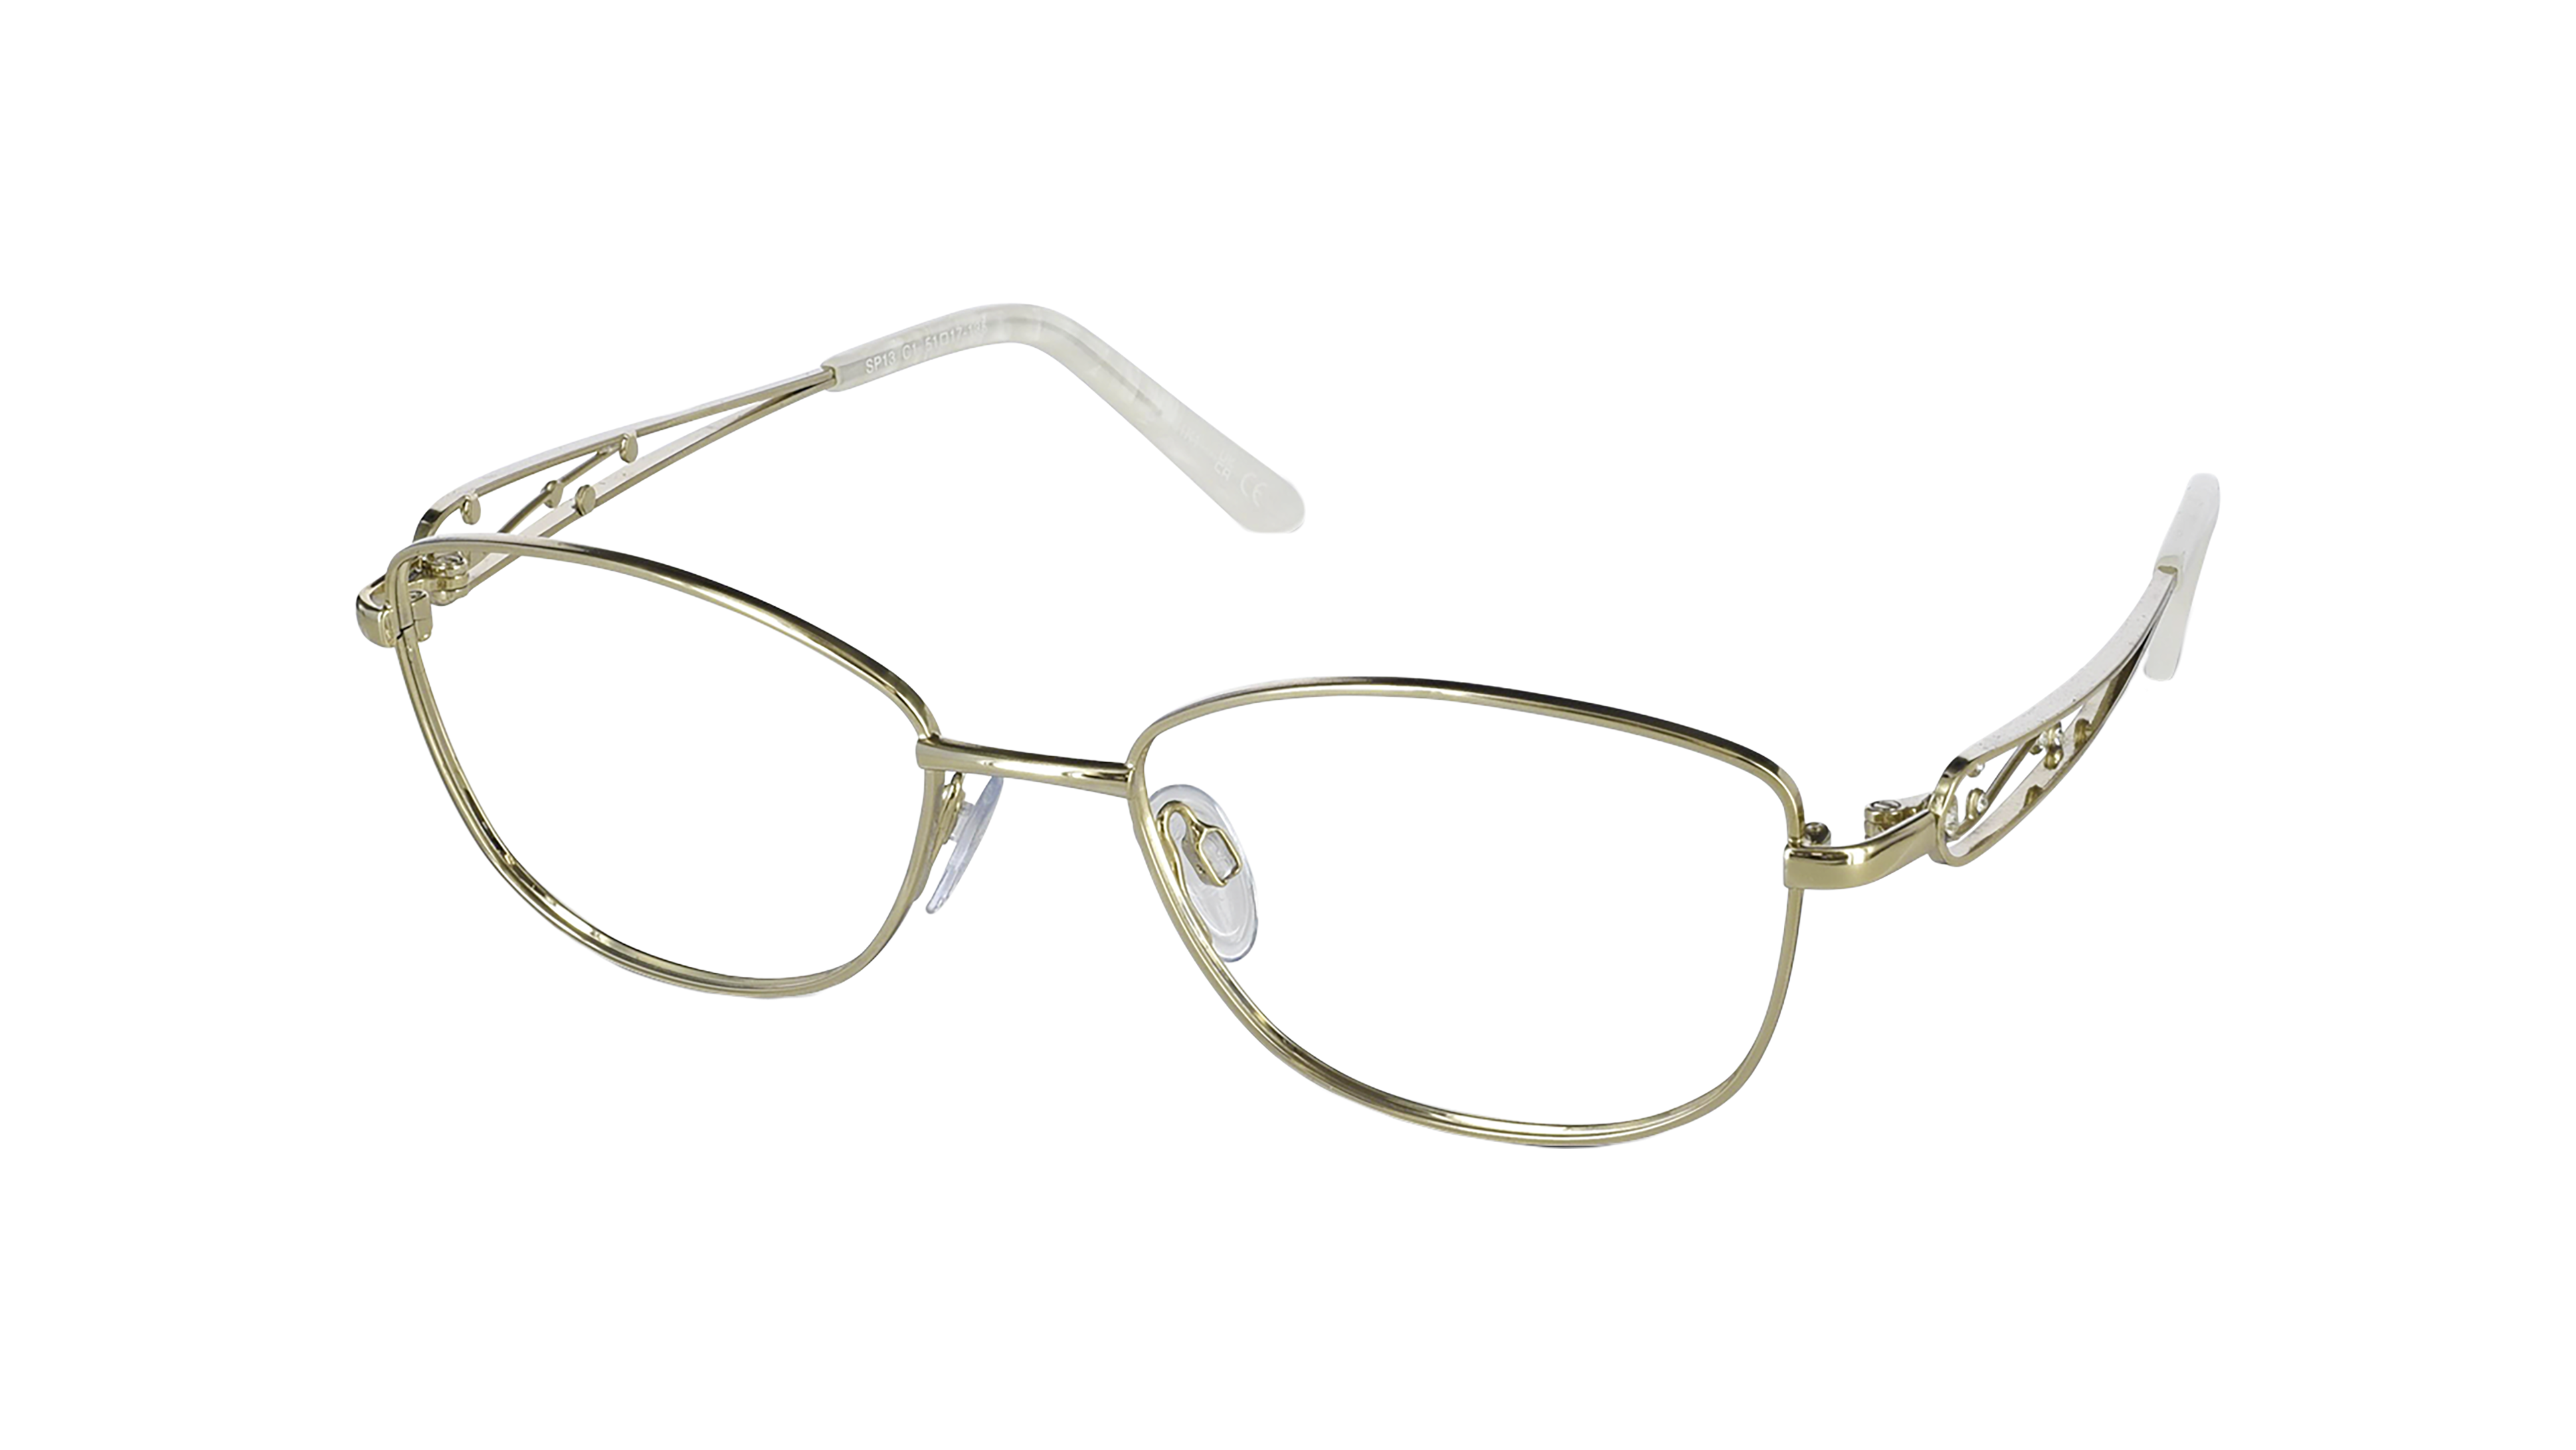 Angle_Left01 Palazzo SP13 (C1) Glasses Transparent / Gold